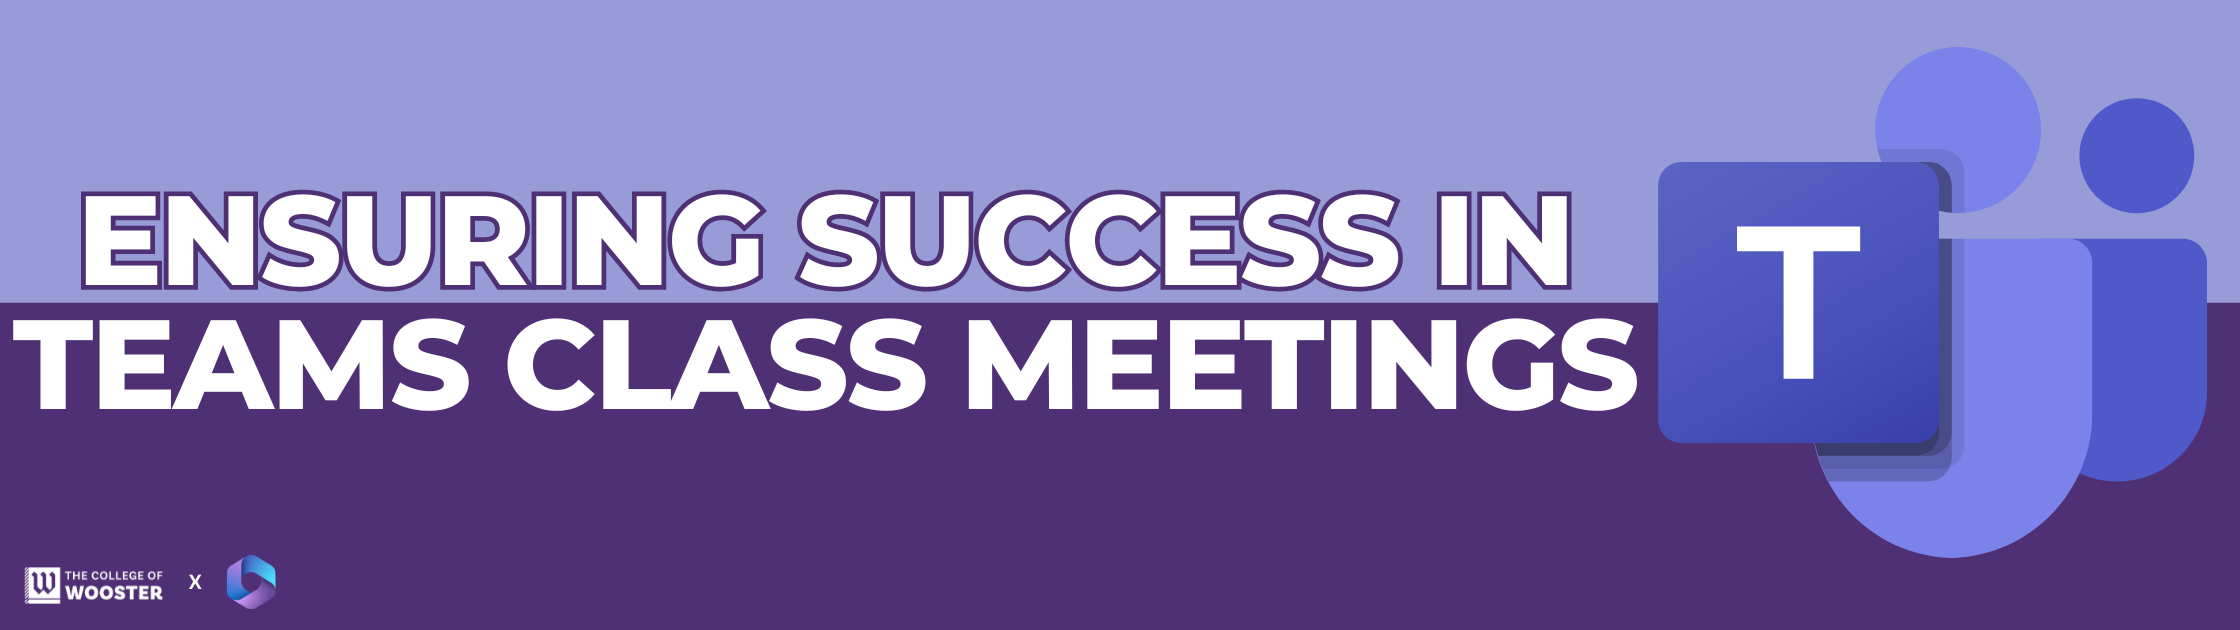 Ensuring Success in Teams Class Meetings banner